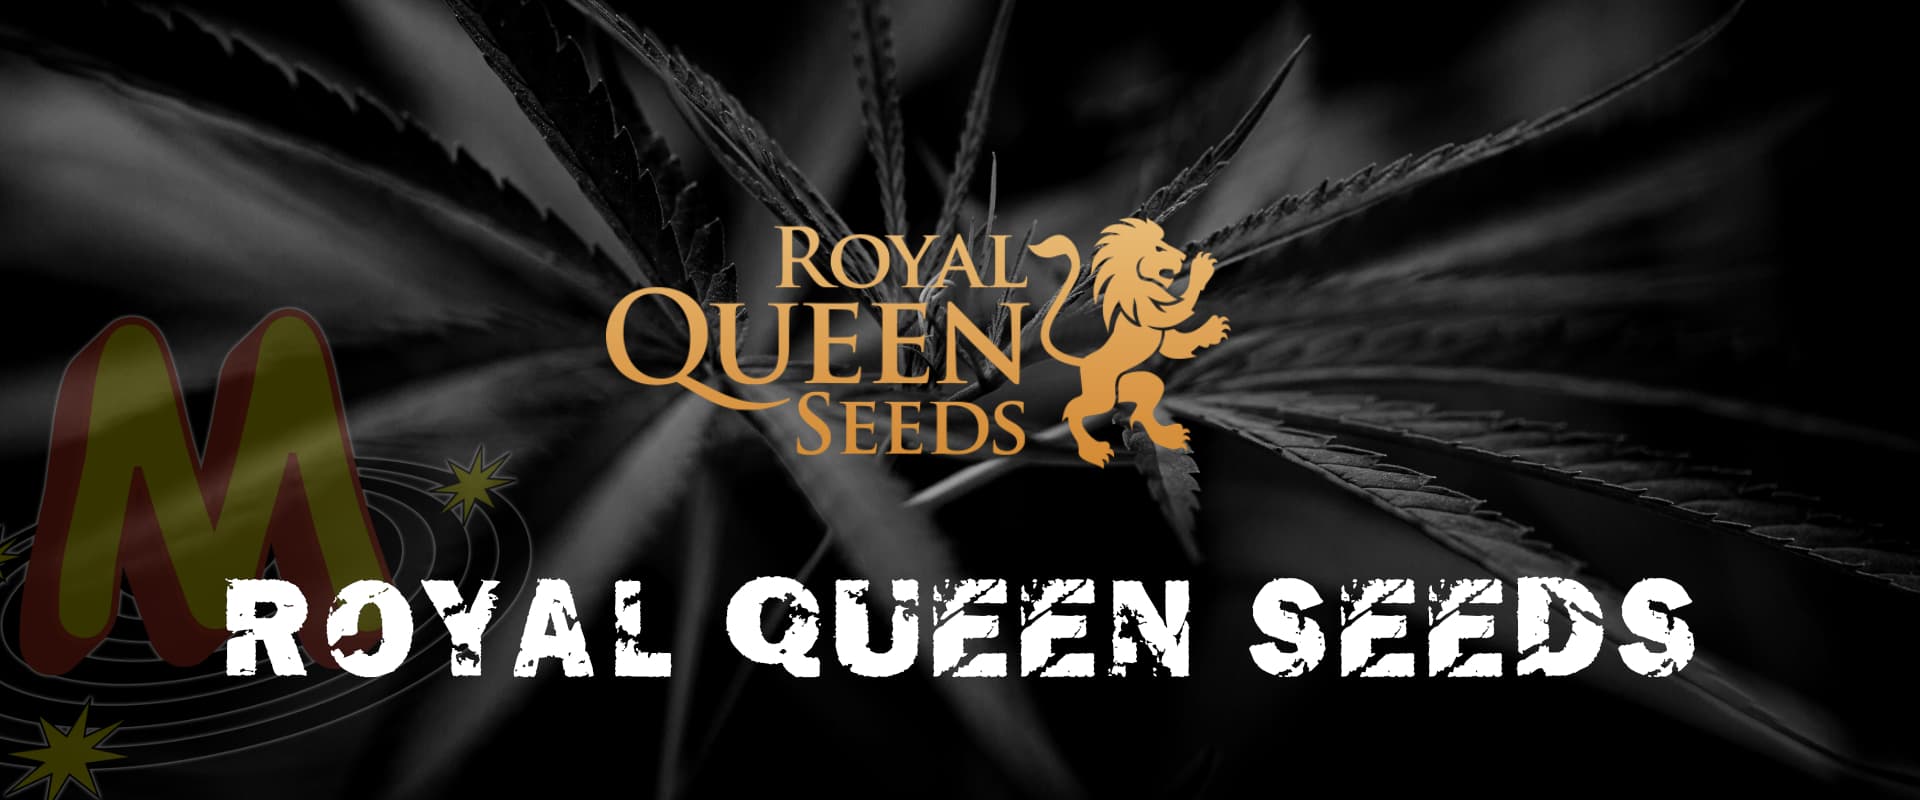 Royal Queen Seeds Banner